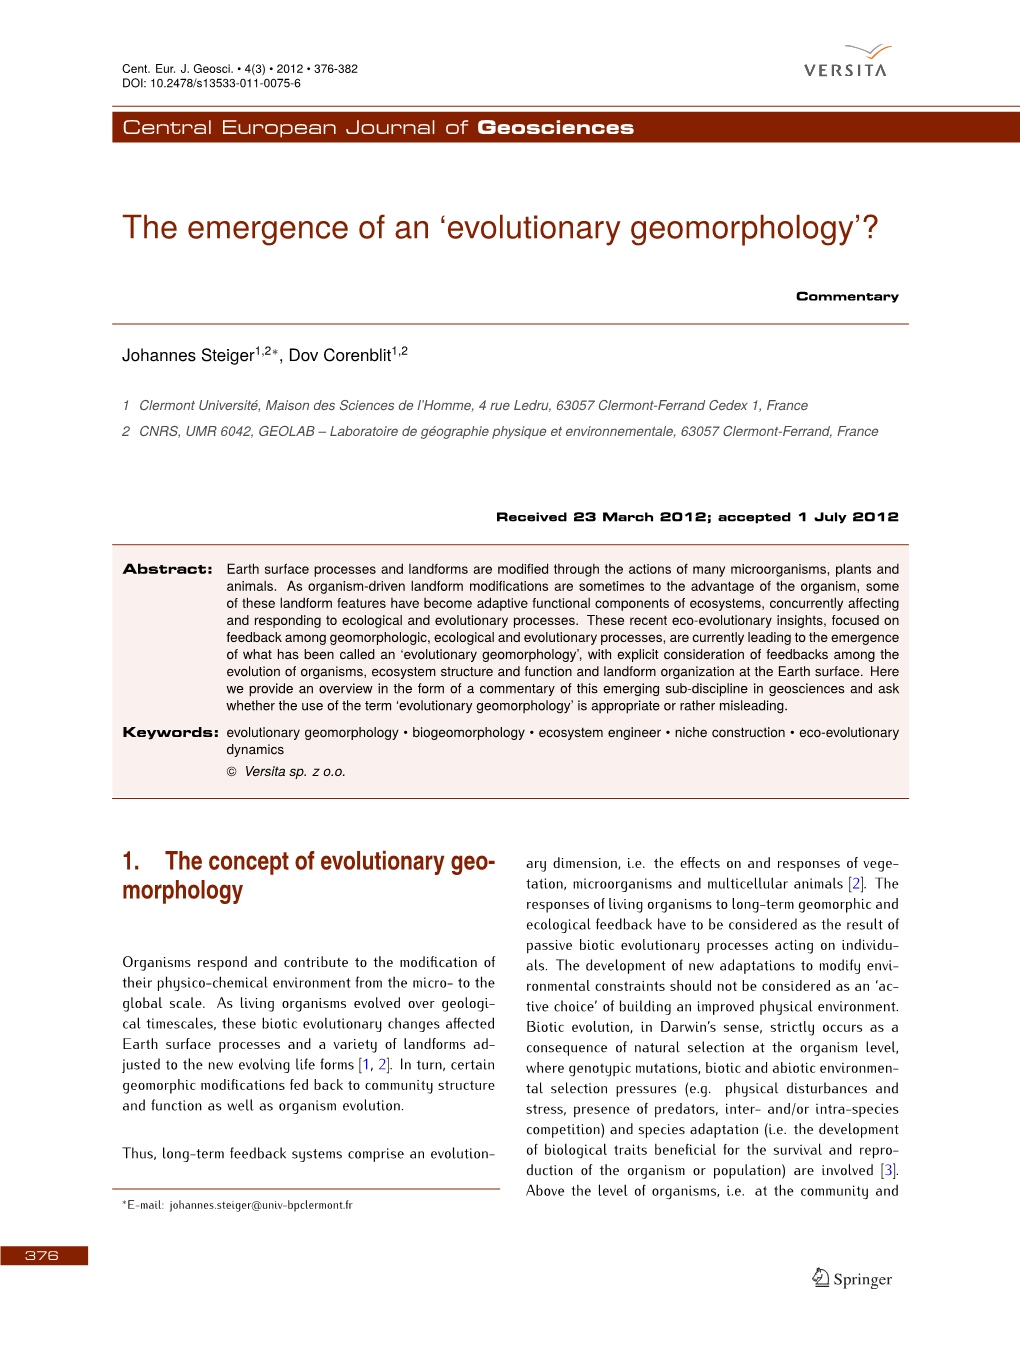 The Emergence of an 'Evolutionary Geomorphology'?